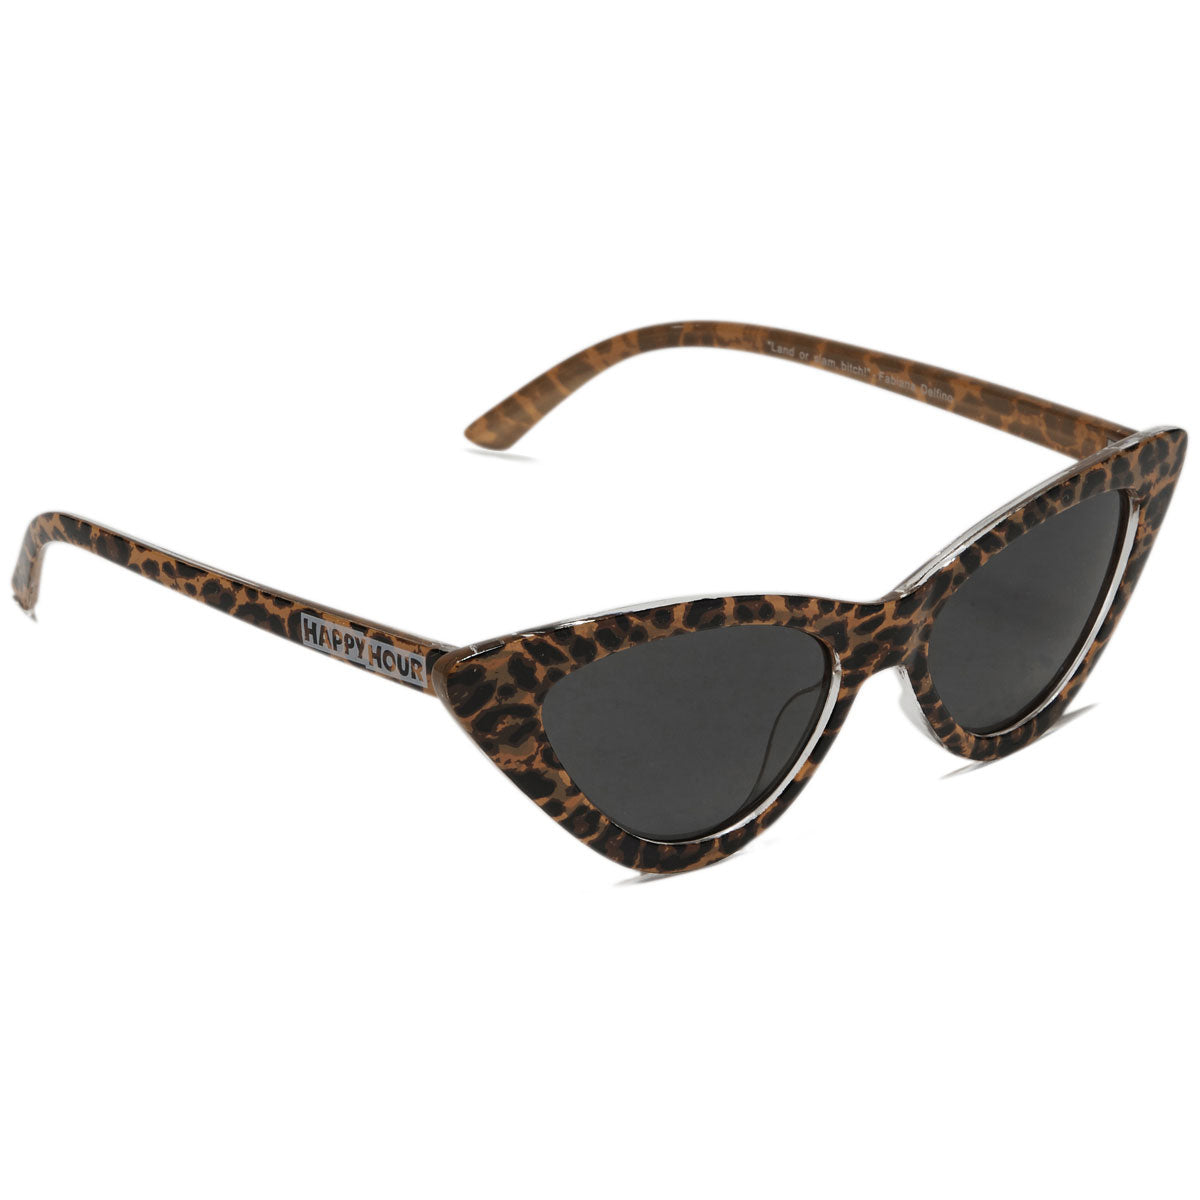 Happy Hour Space Needles Sunglasses - Leopard/Delfino